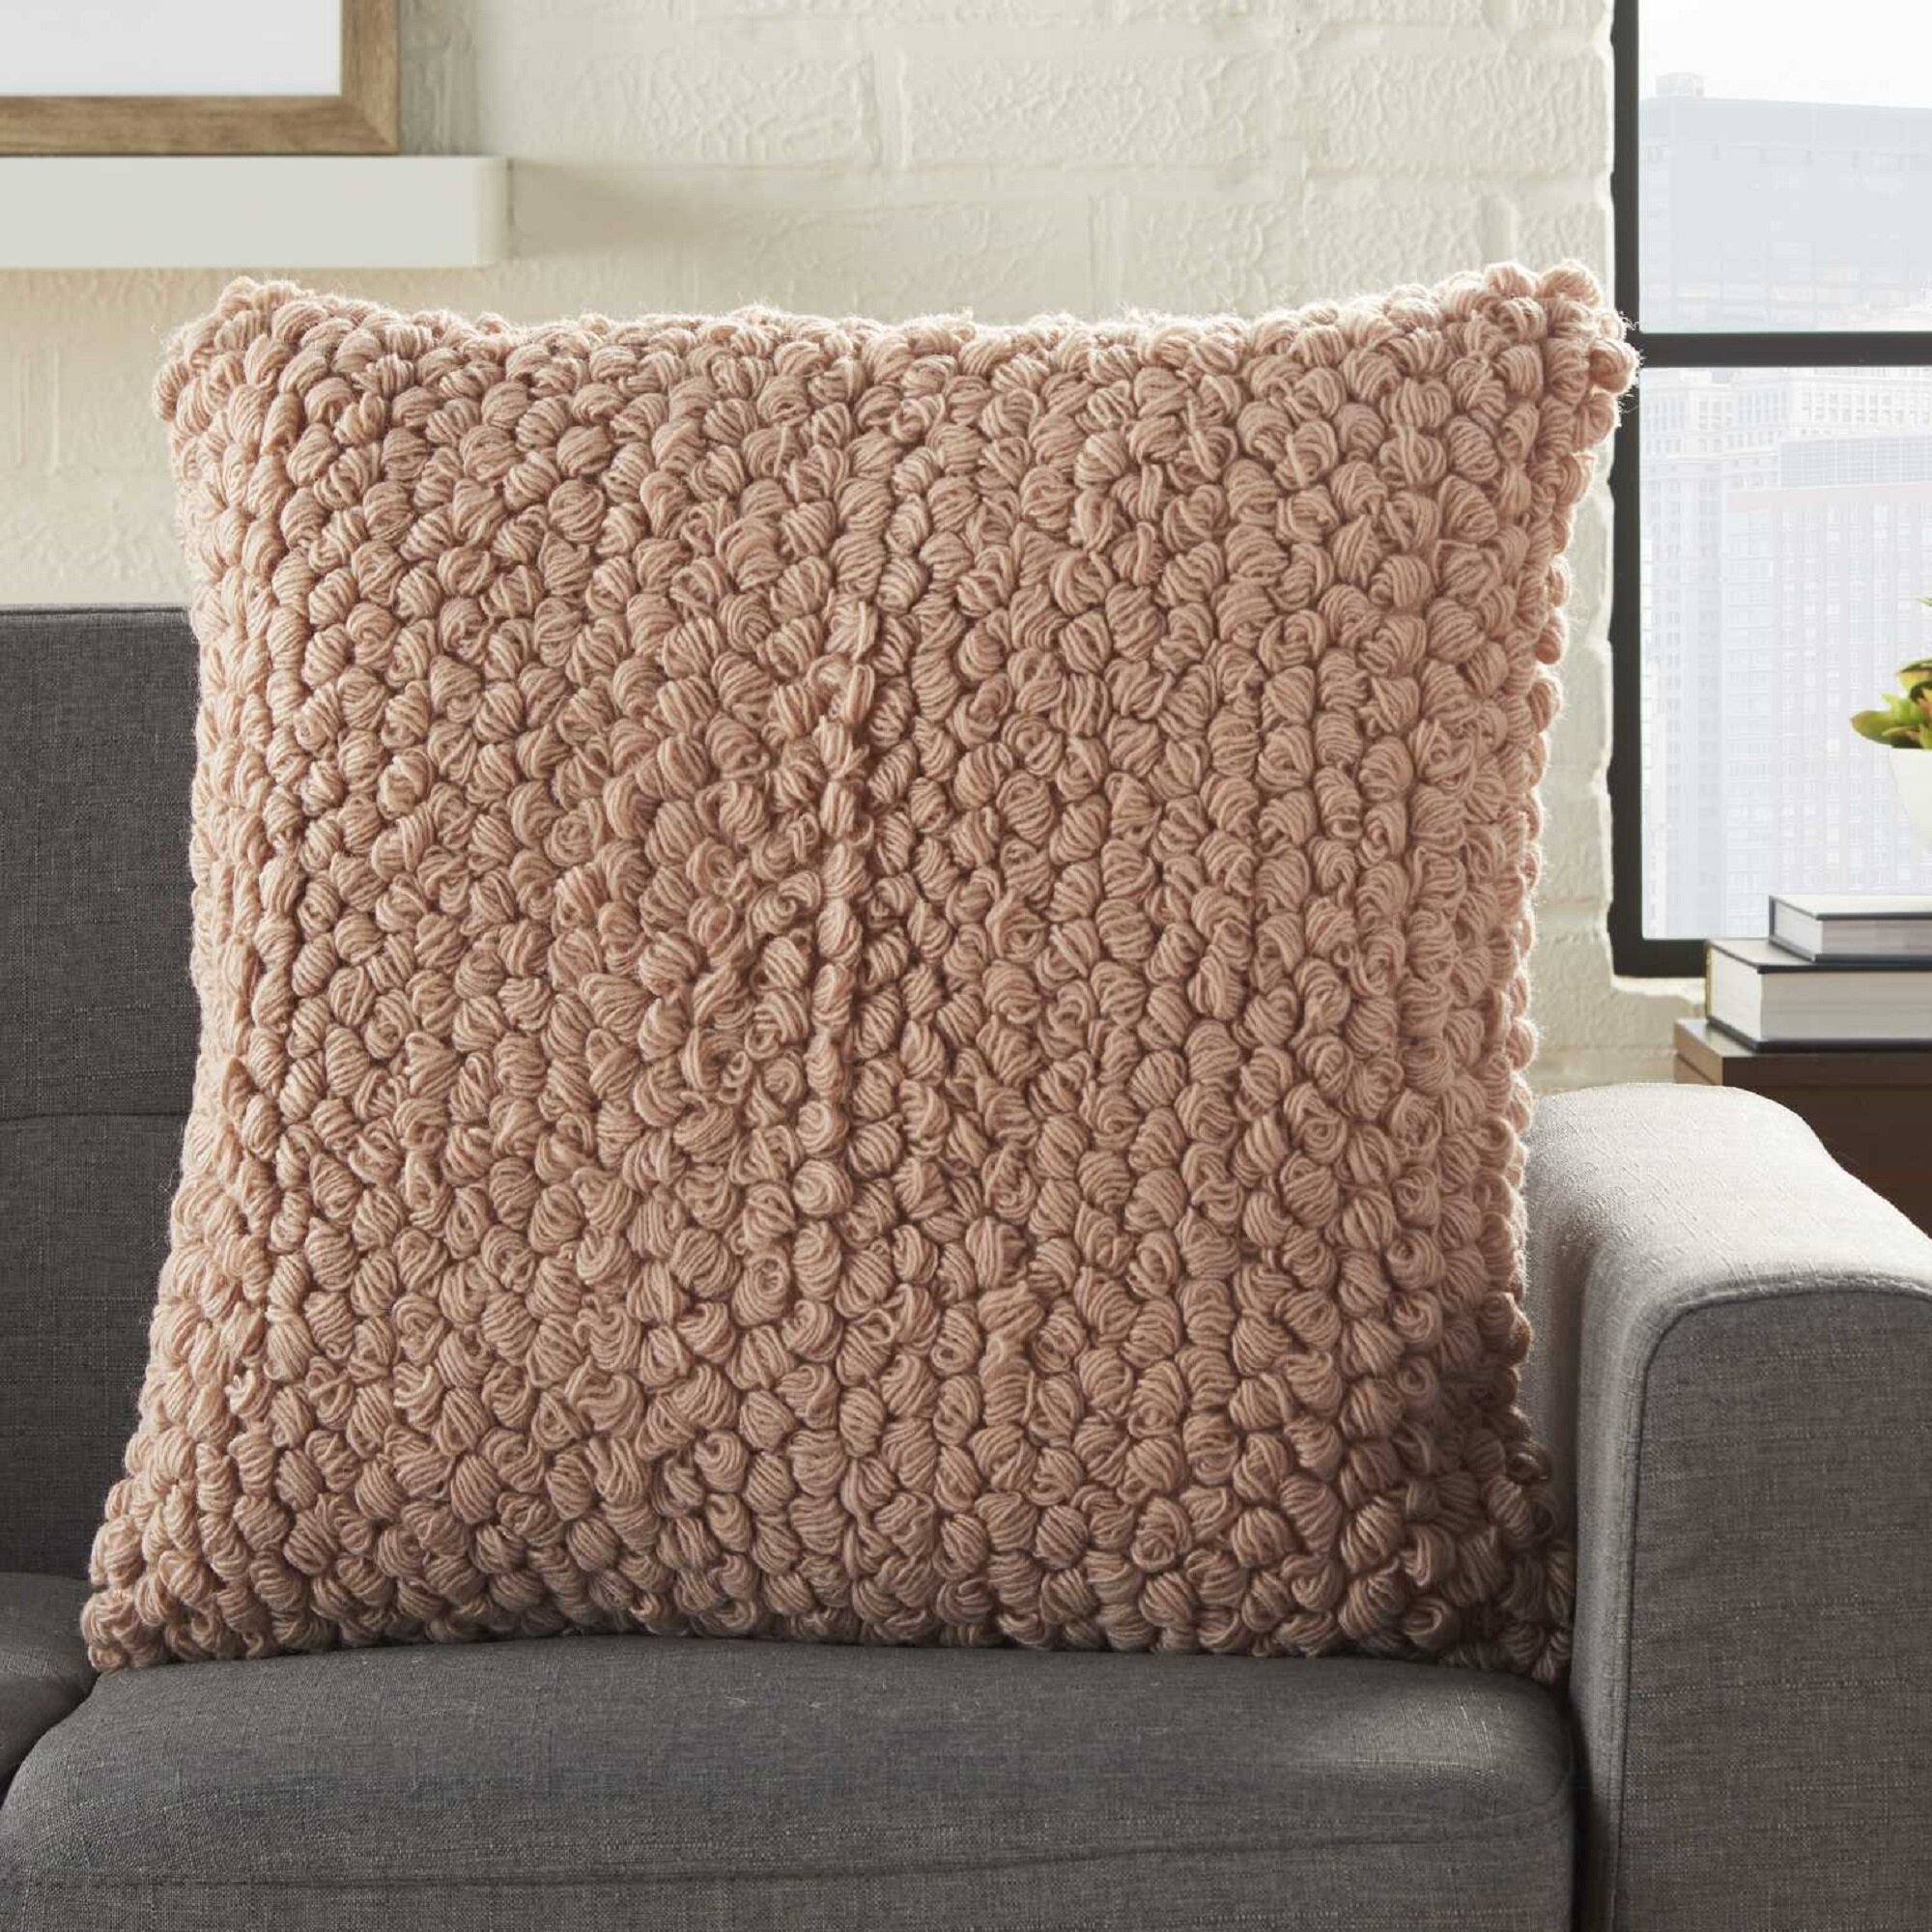 blush colored sofa pillows